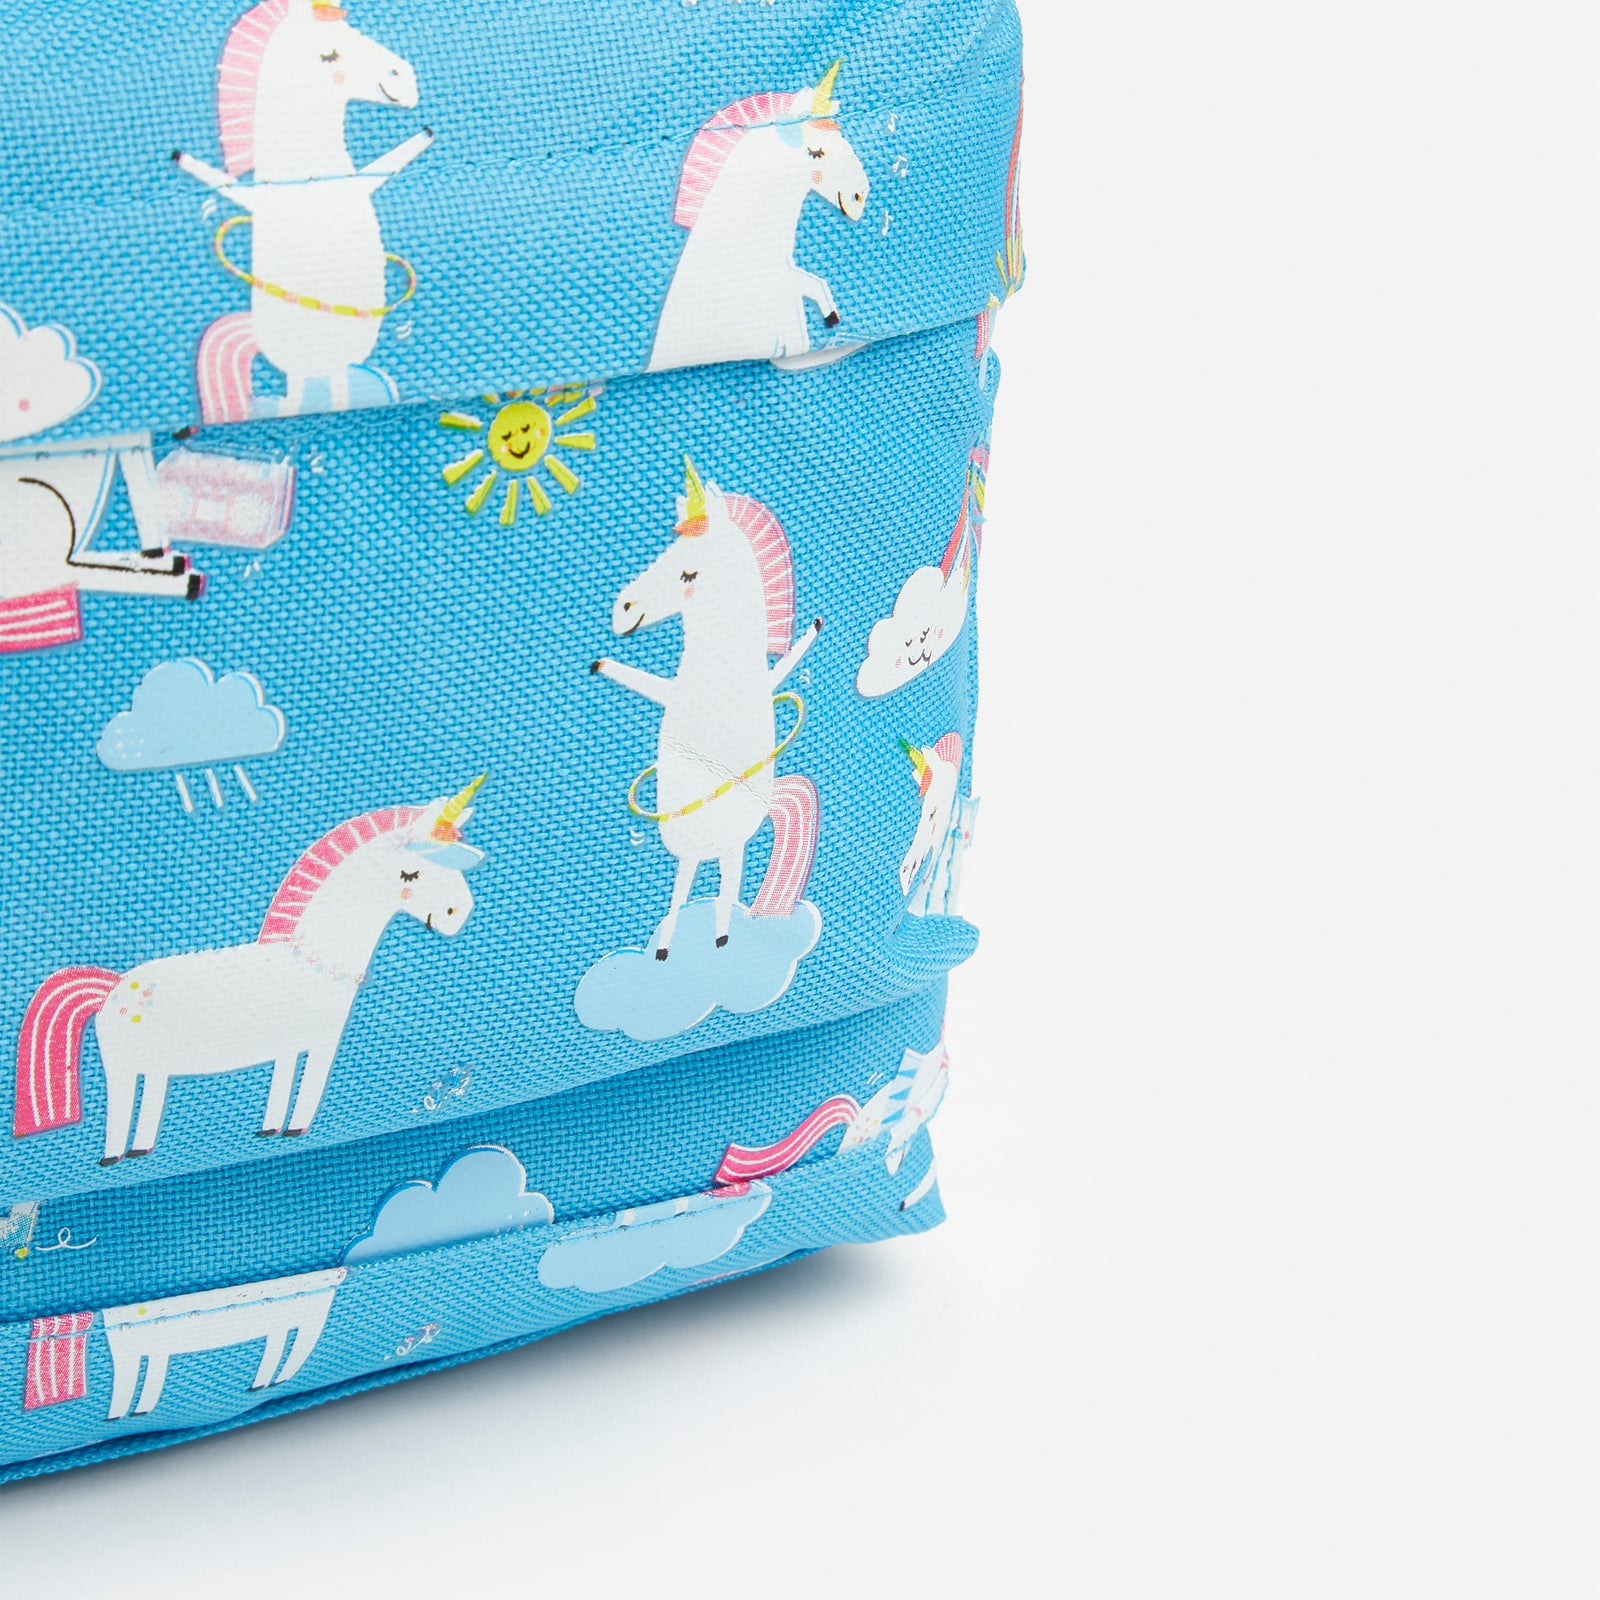 Embroidered Mini Unicorn Backpack